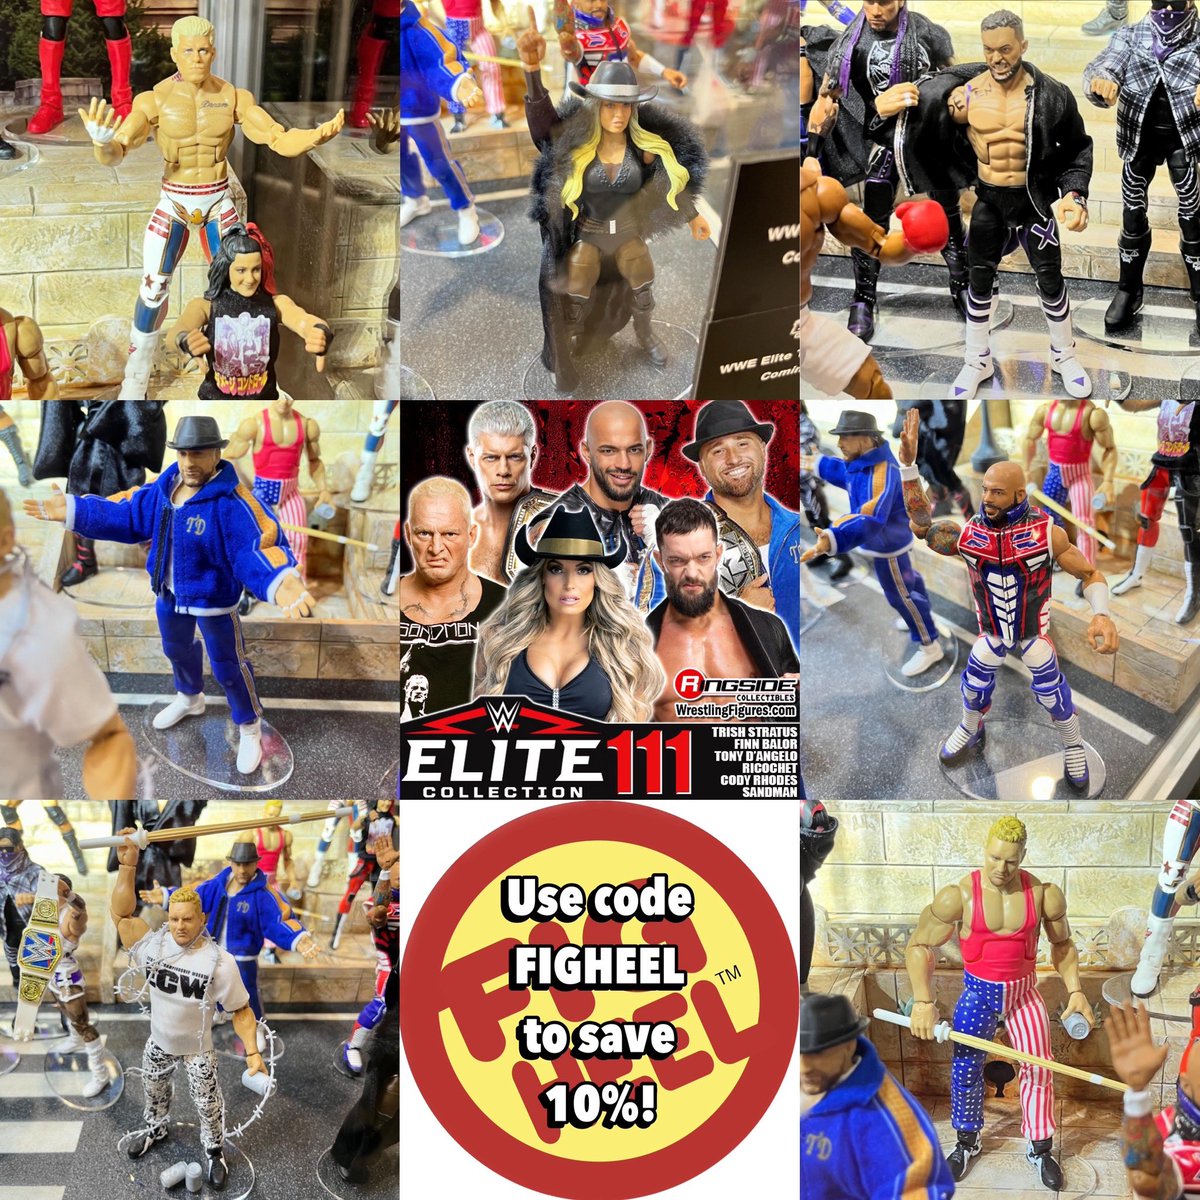 Pre-Order WWE Elite 111 on @ringsidec & use code FIGHEEL to save 10%!

#figheel #actionfigures #toycommunity #toycollector #wrestlingfigures #wwe #aew #njpw #tna